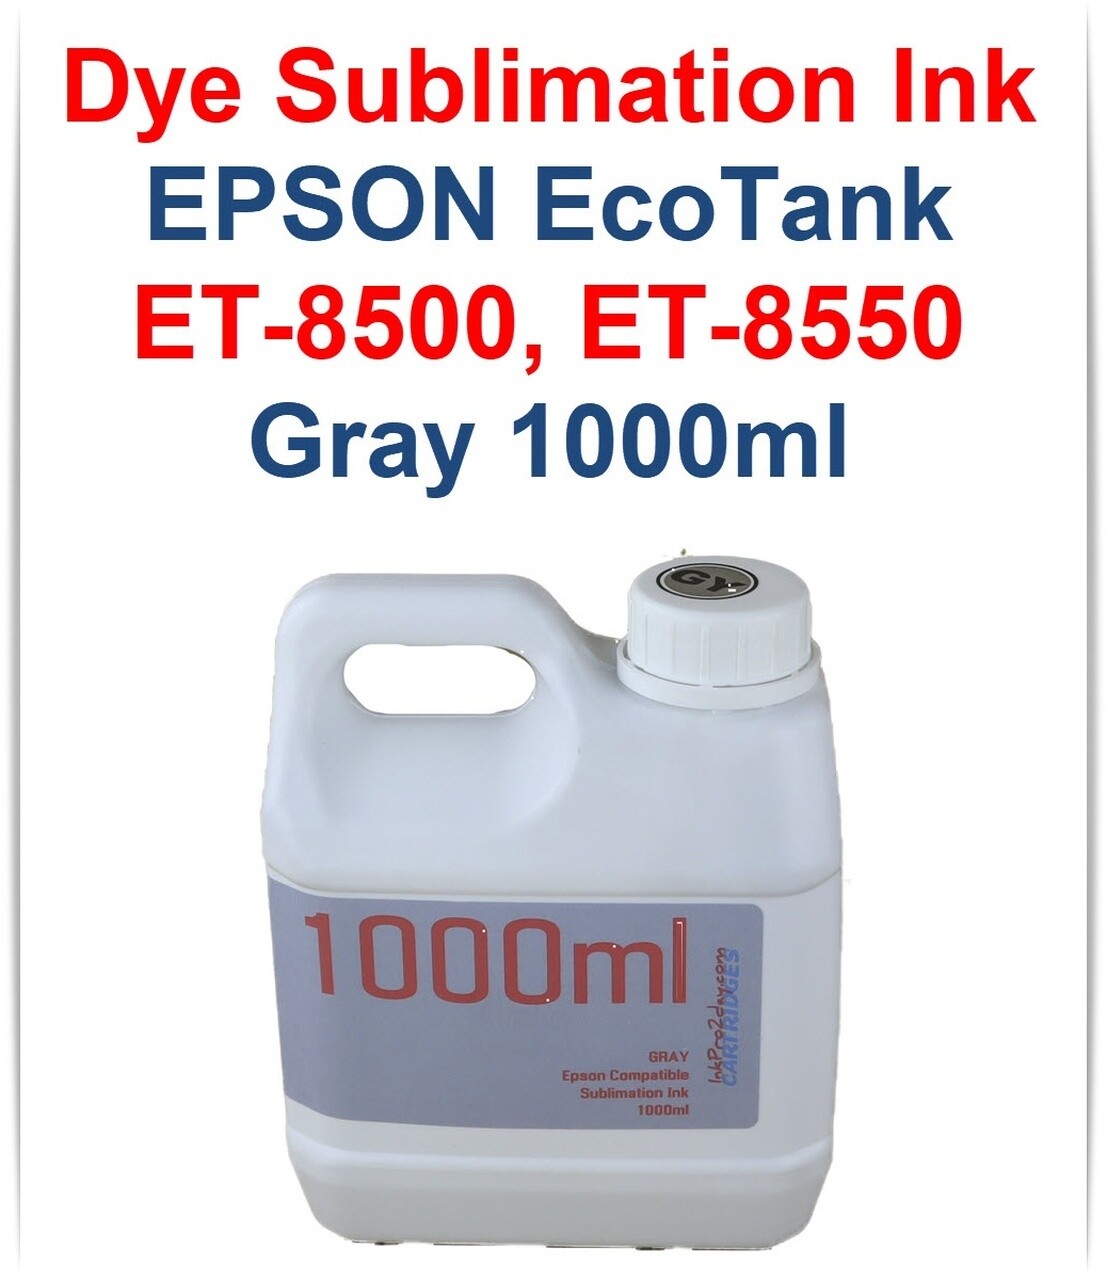 Gray Dye Sublimation Ink 1000ml bottle for EPSON EcoTank ET-8500 ET-8550 printers